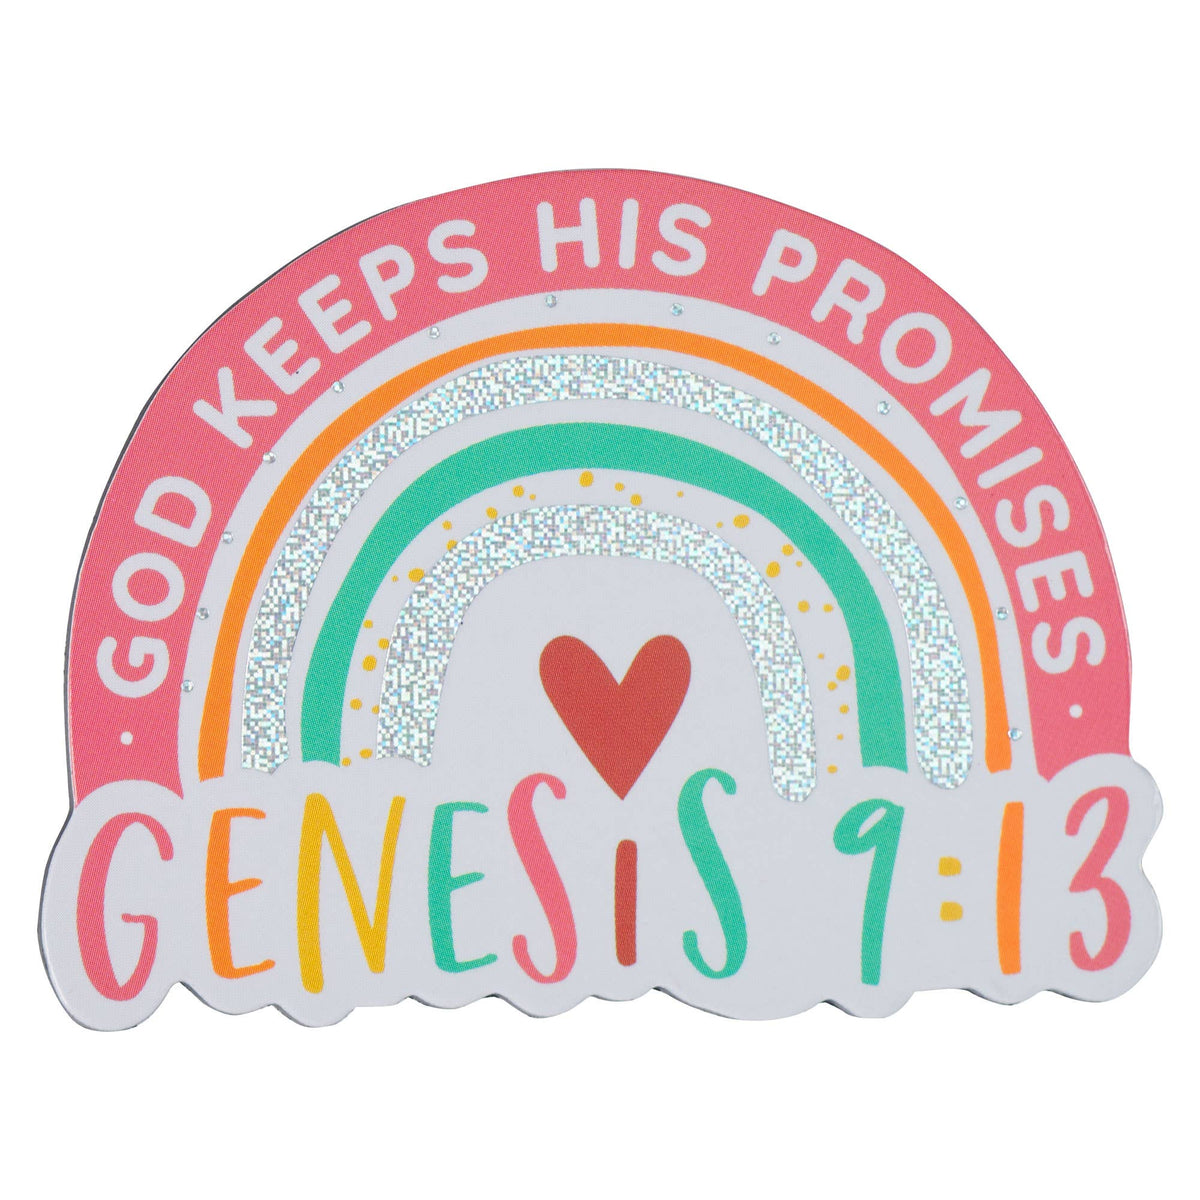 God Keeps His Promises Magnet - Genesis 9:13